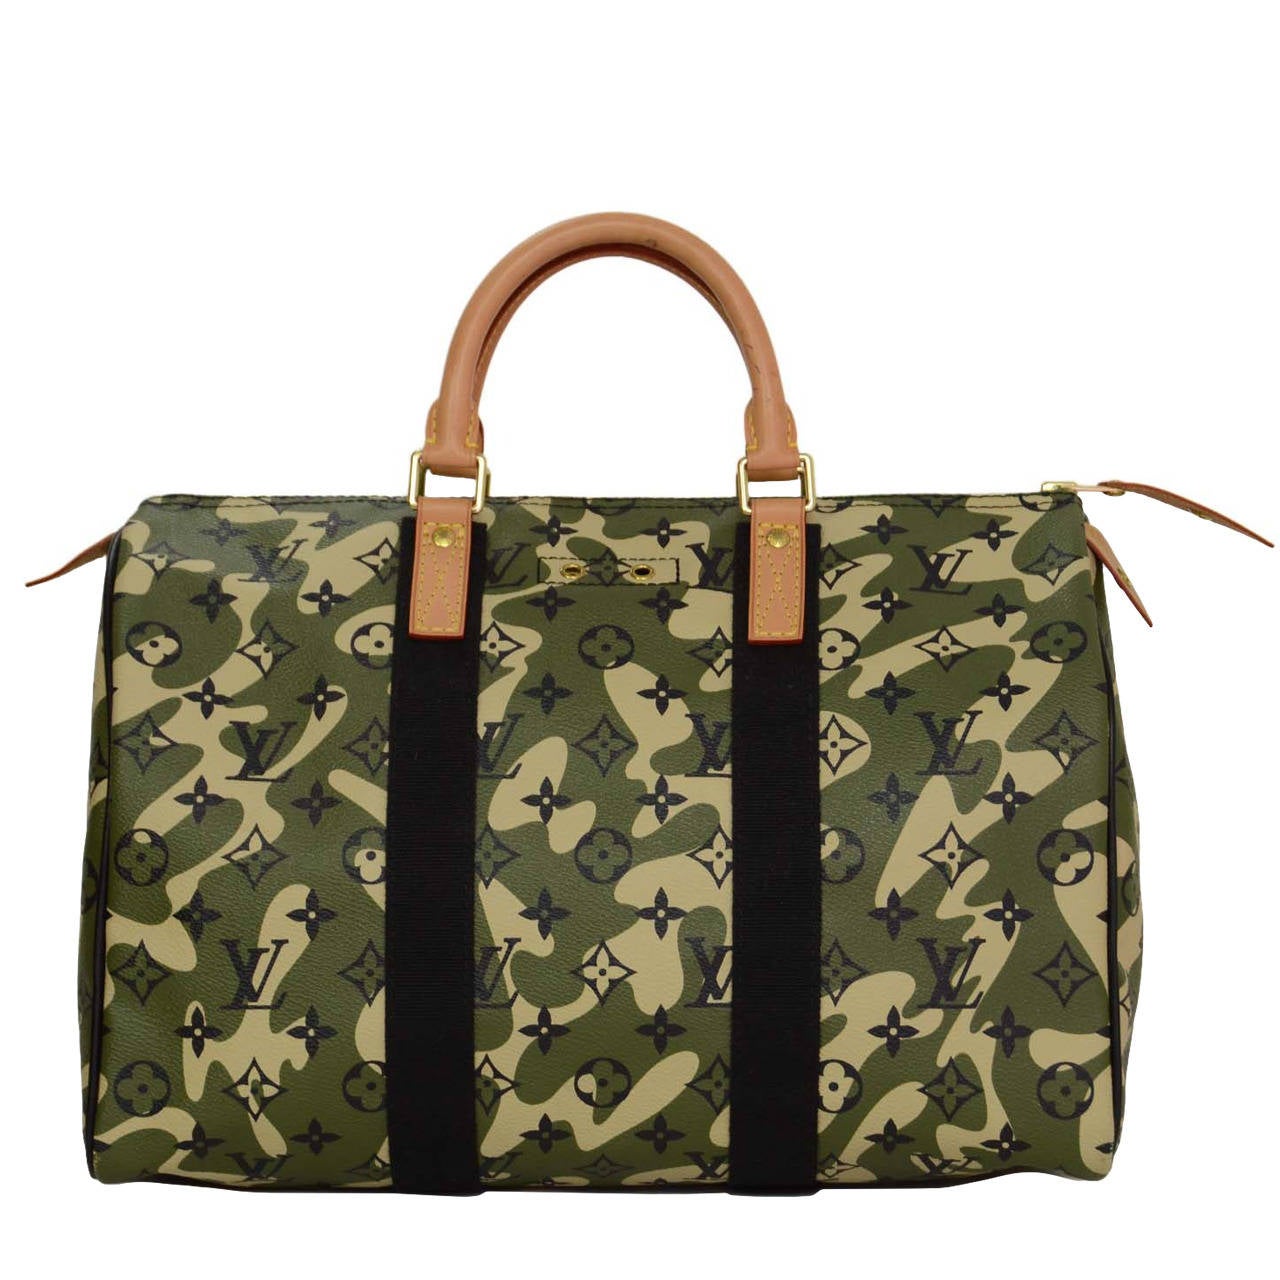 LOUIS VUITTON Ltd. Ed. Monogramouflage Canvas Speedy 35 Bag